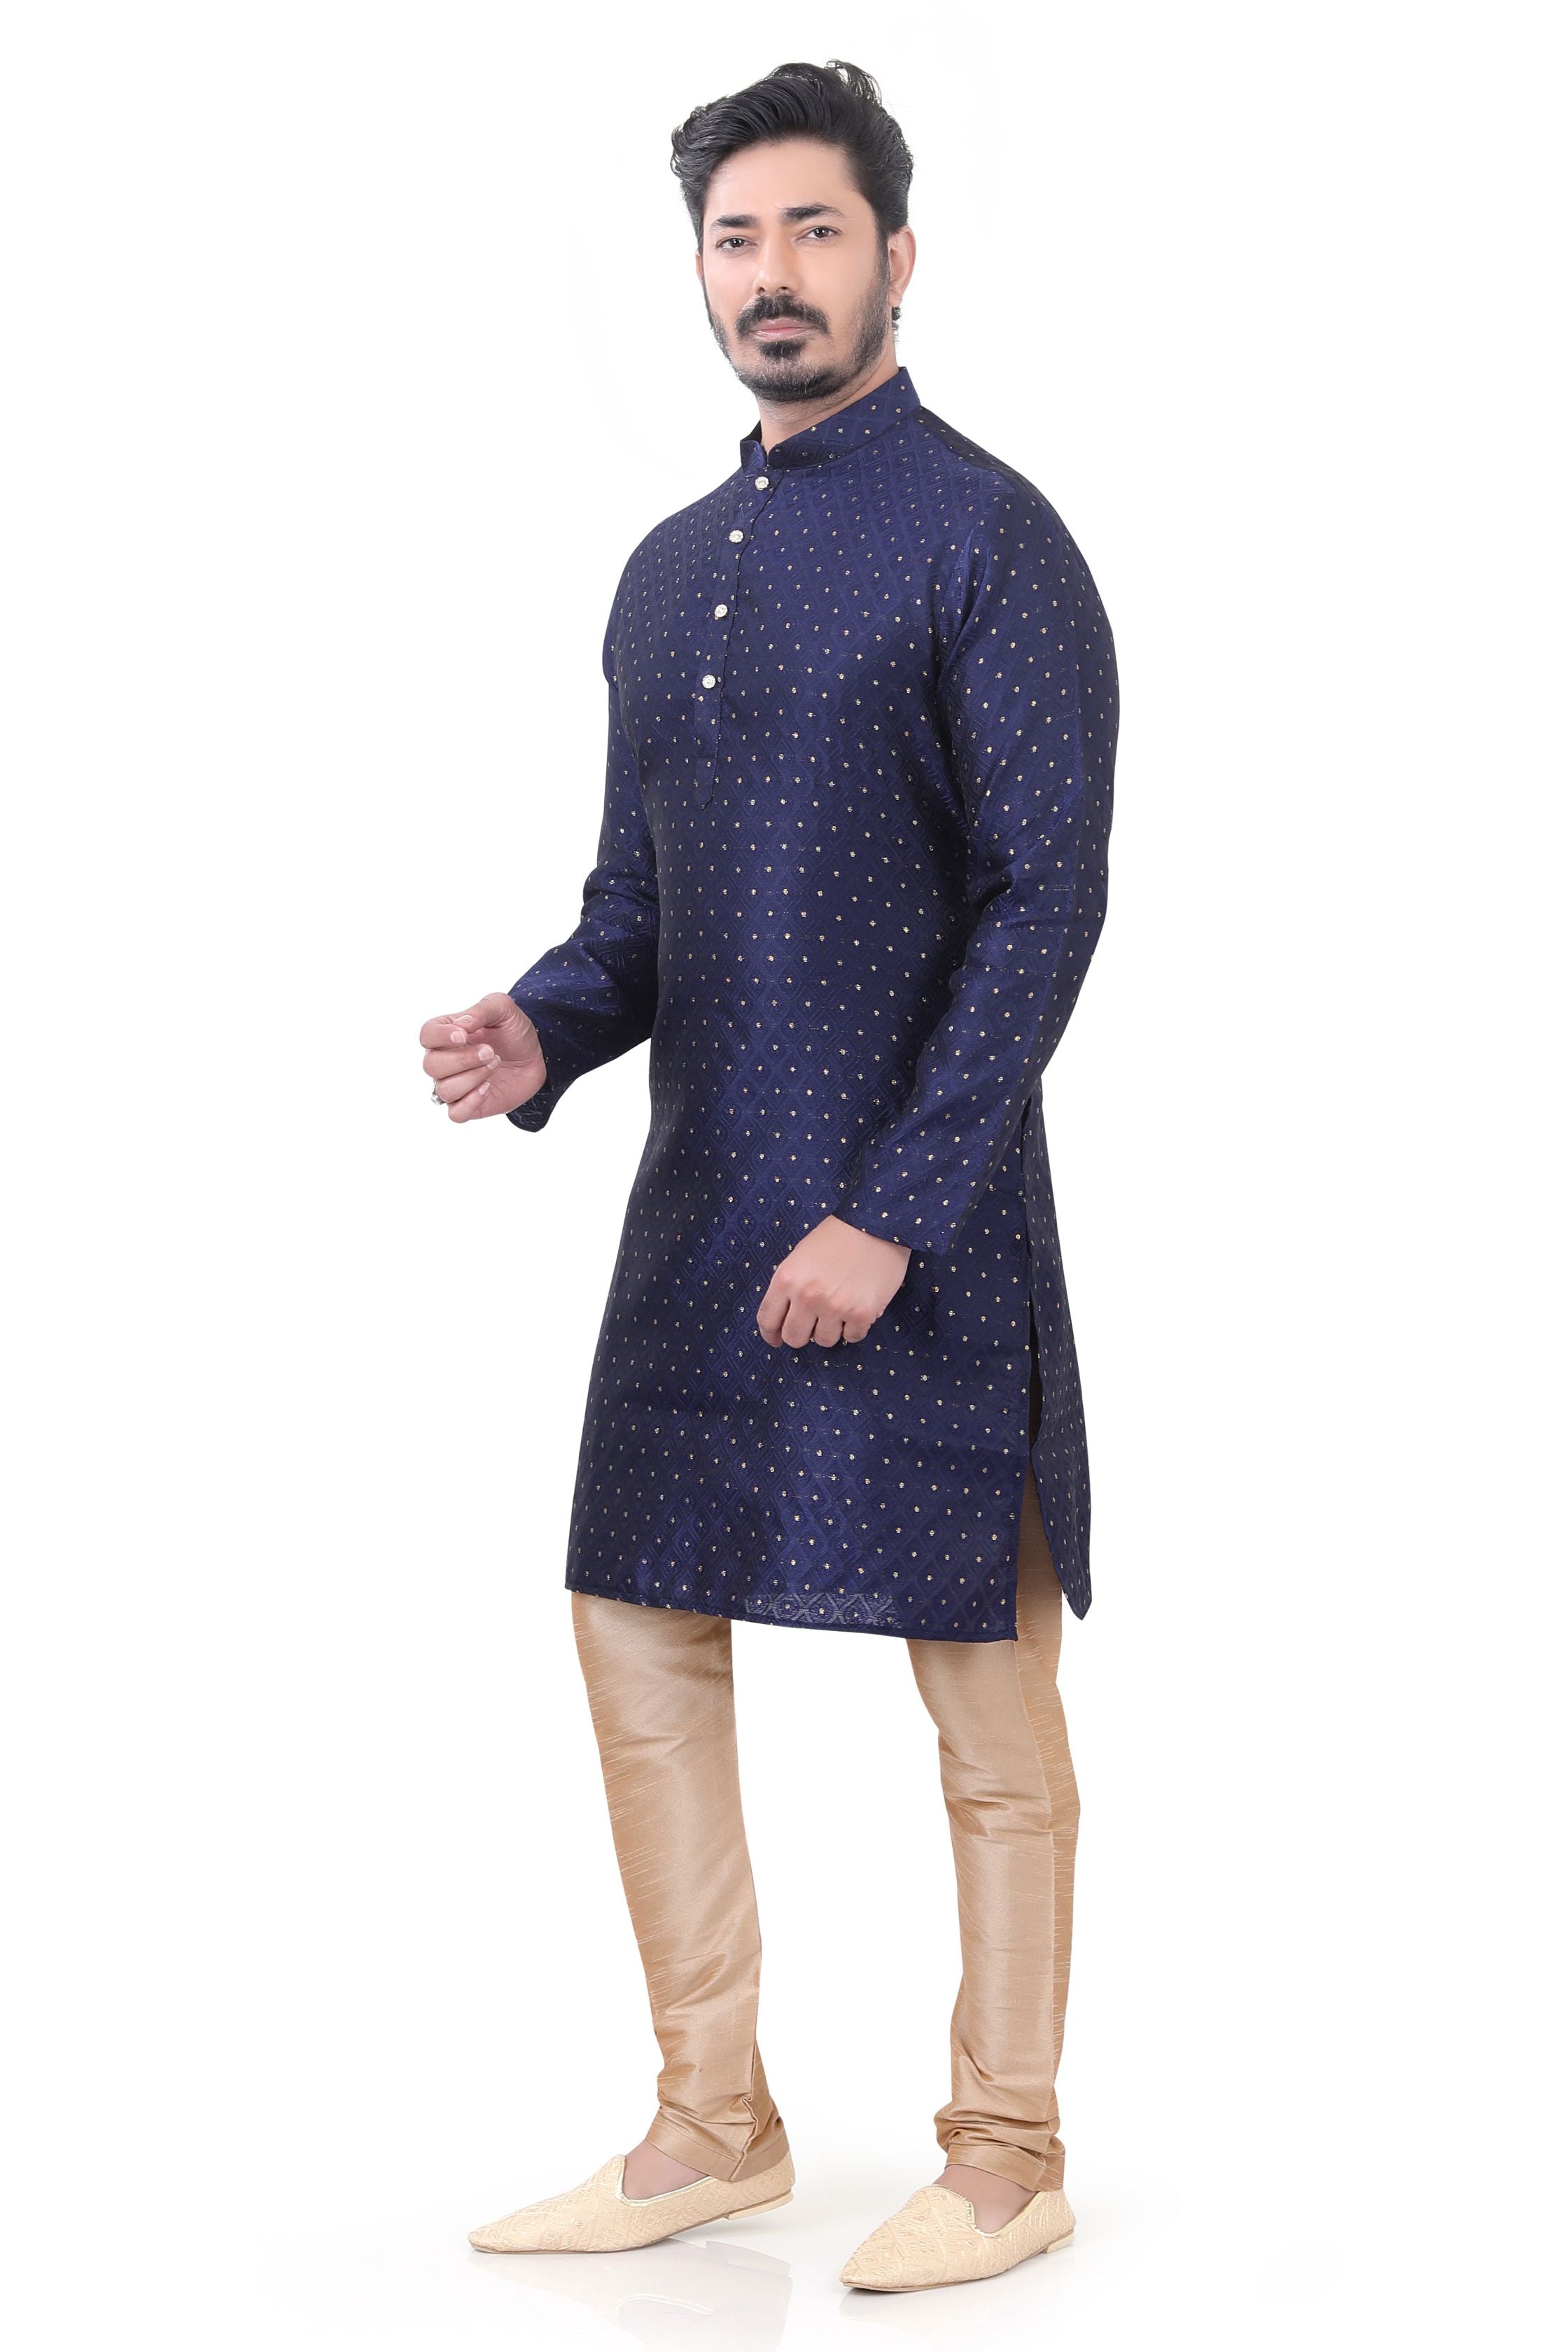 Rajwadi Silk Kurta pajama in Navy blue color